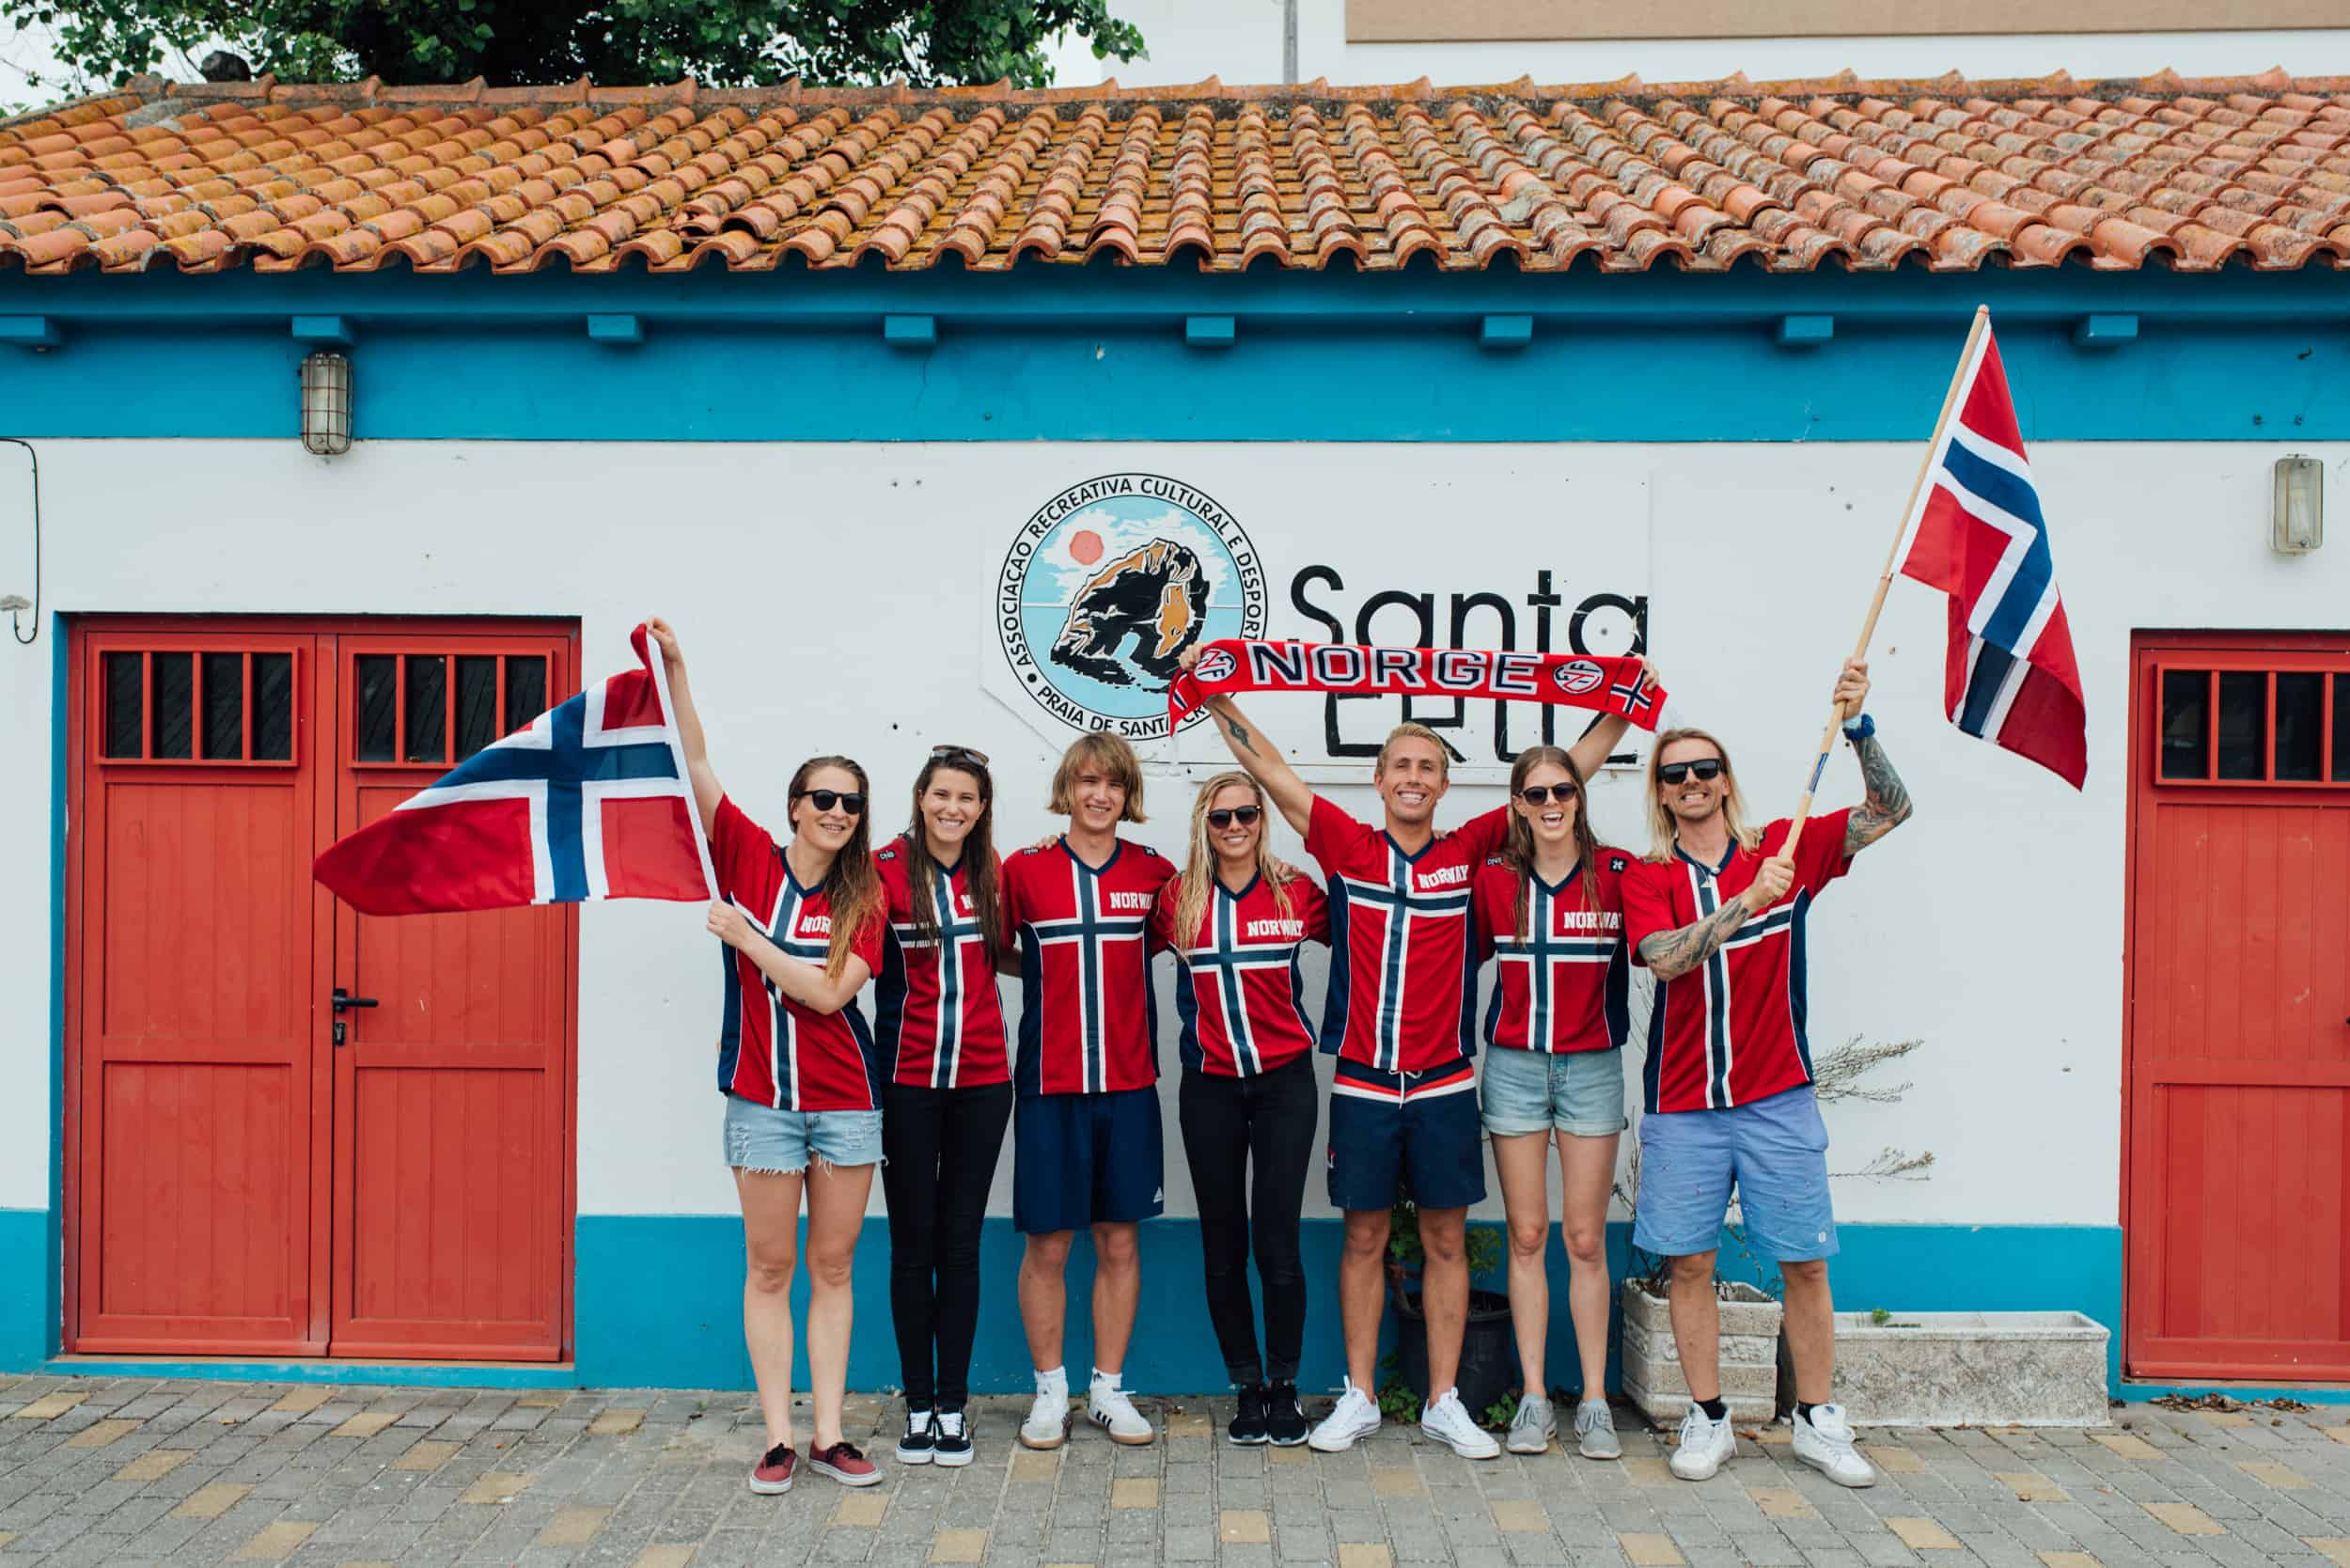 Norge surf team